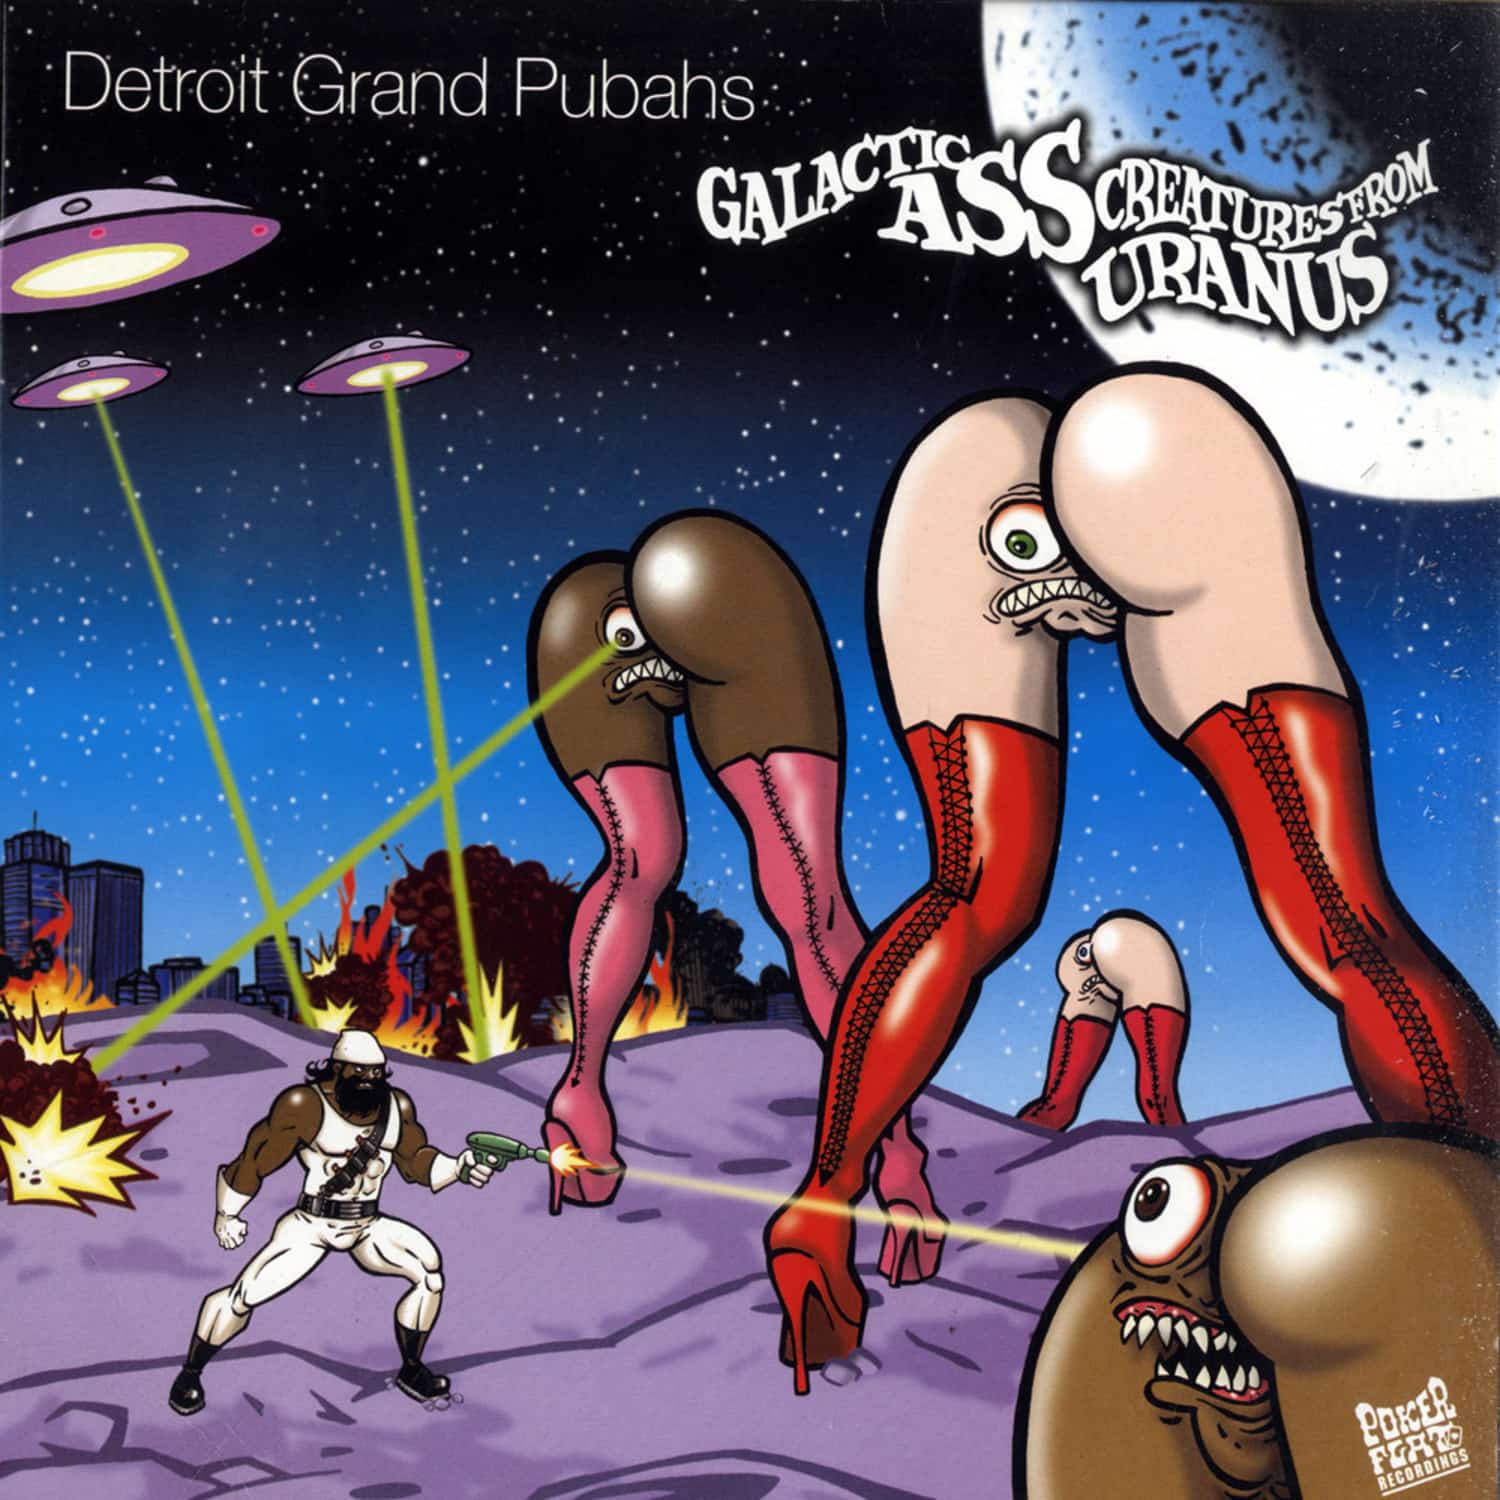 Detroit Grand Pubahs - GALACTIC ASS CREATURES FROM URANUS 